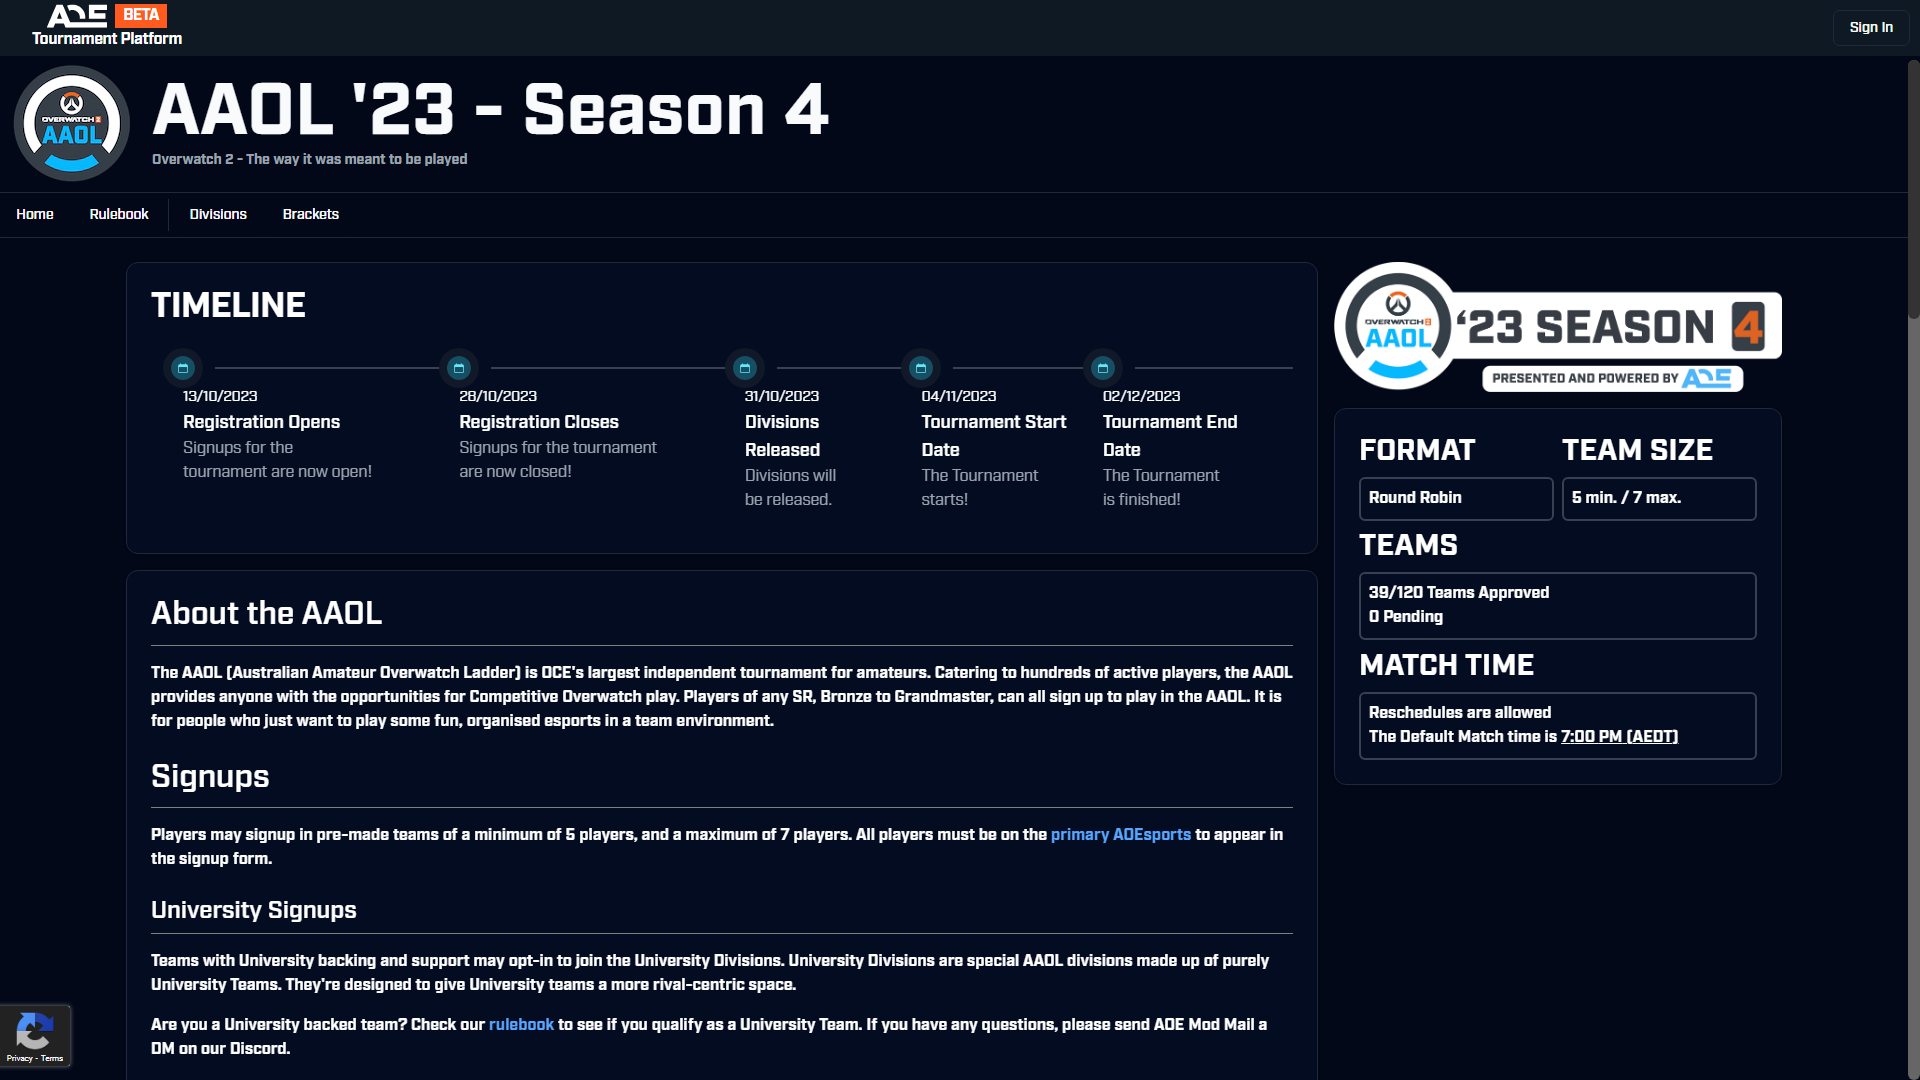 AAOL Season 4 '23 Tournament Page